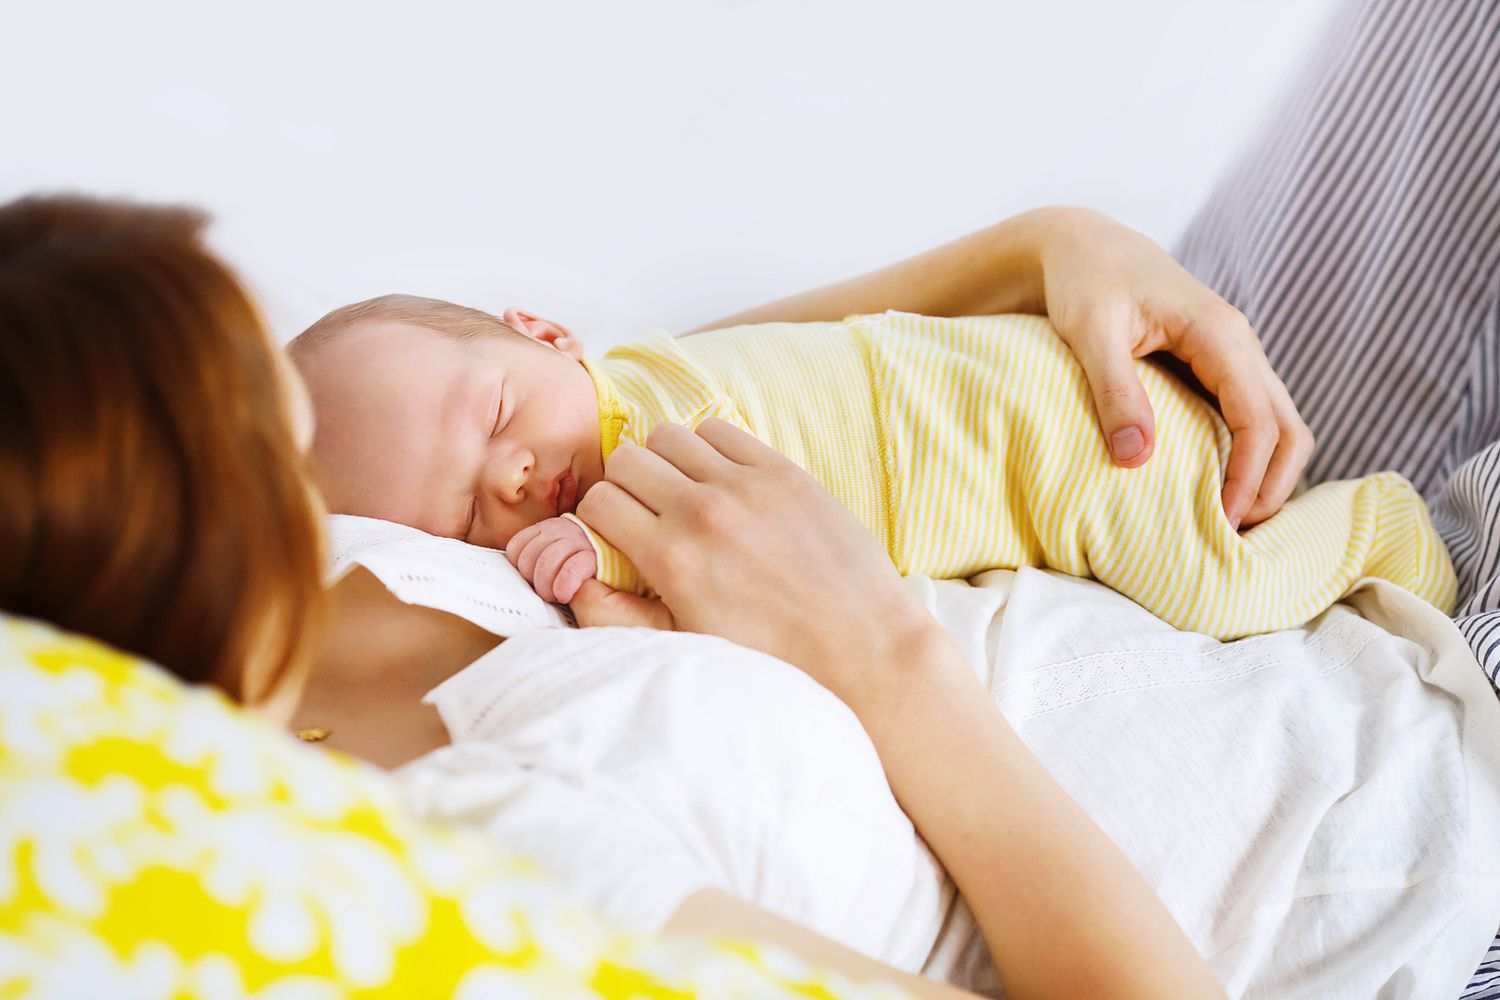 How Much Will Baby Sleep?